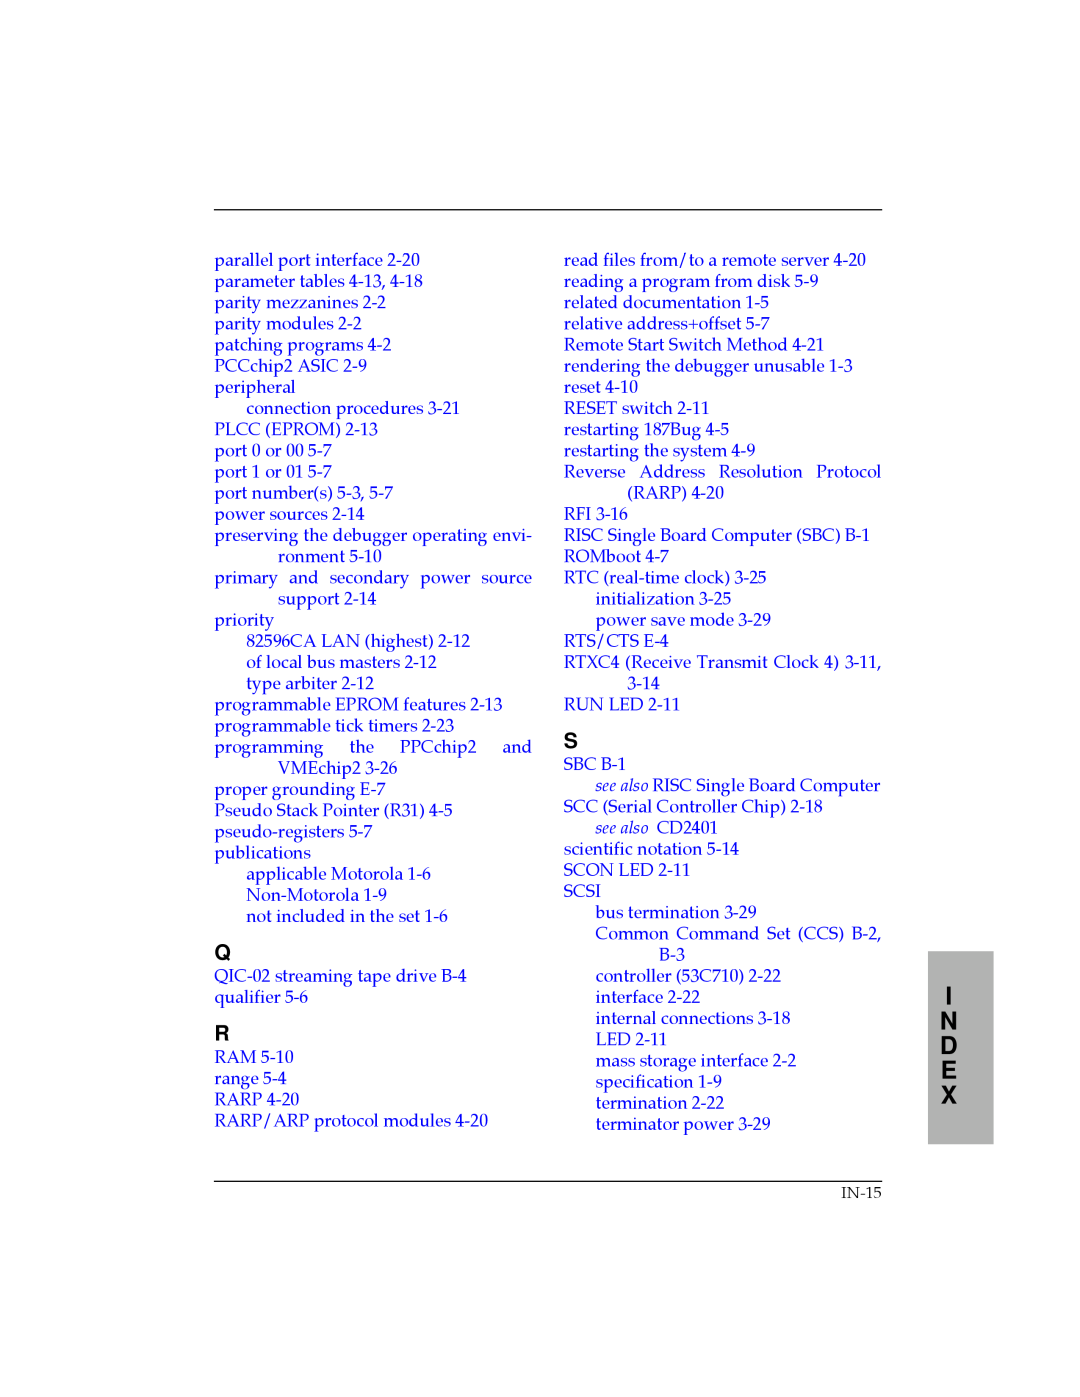 Motorola MVME187 manual I N D E, see also CD2401 scientific notation 5-14 SCON LED 